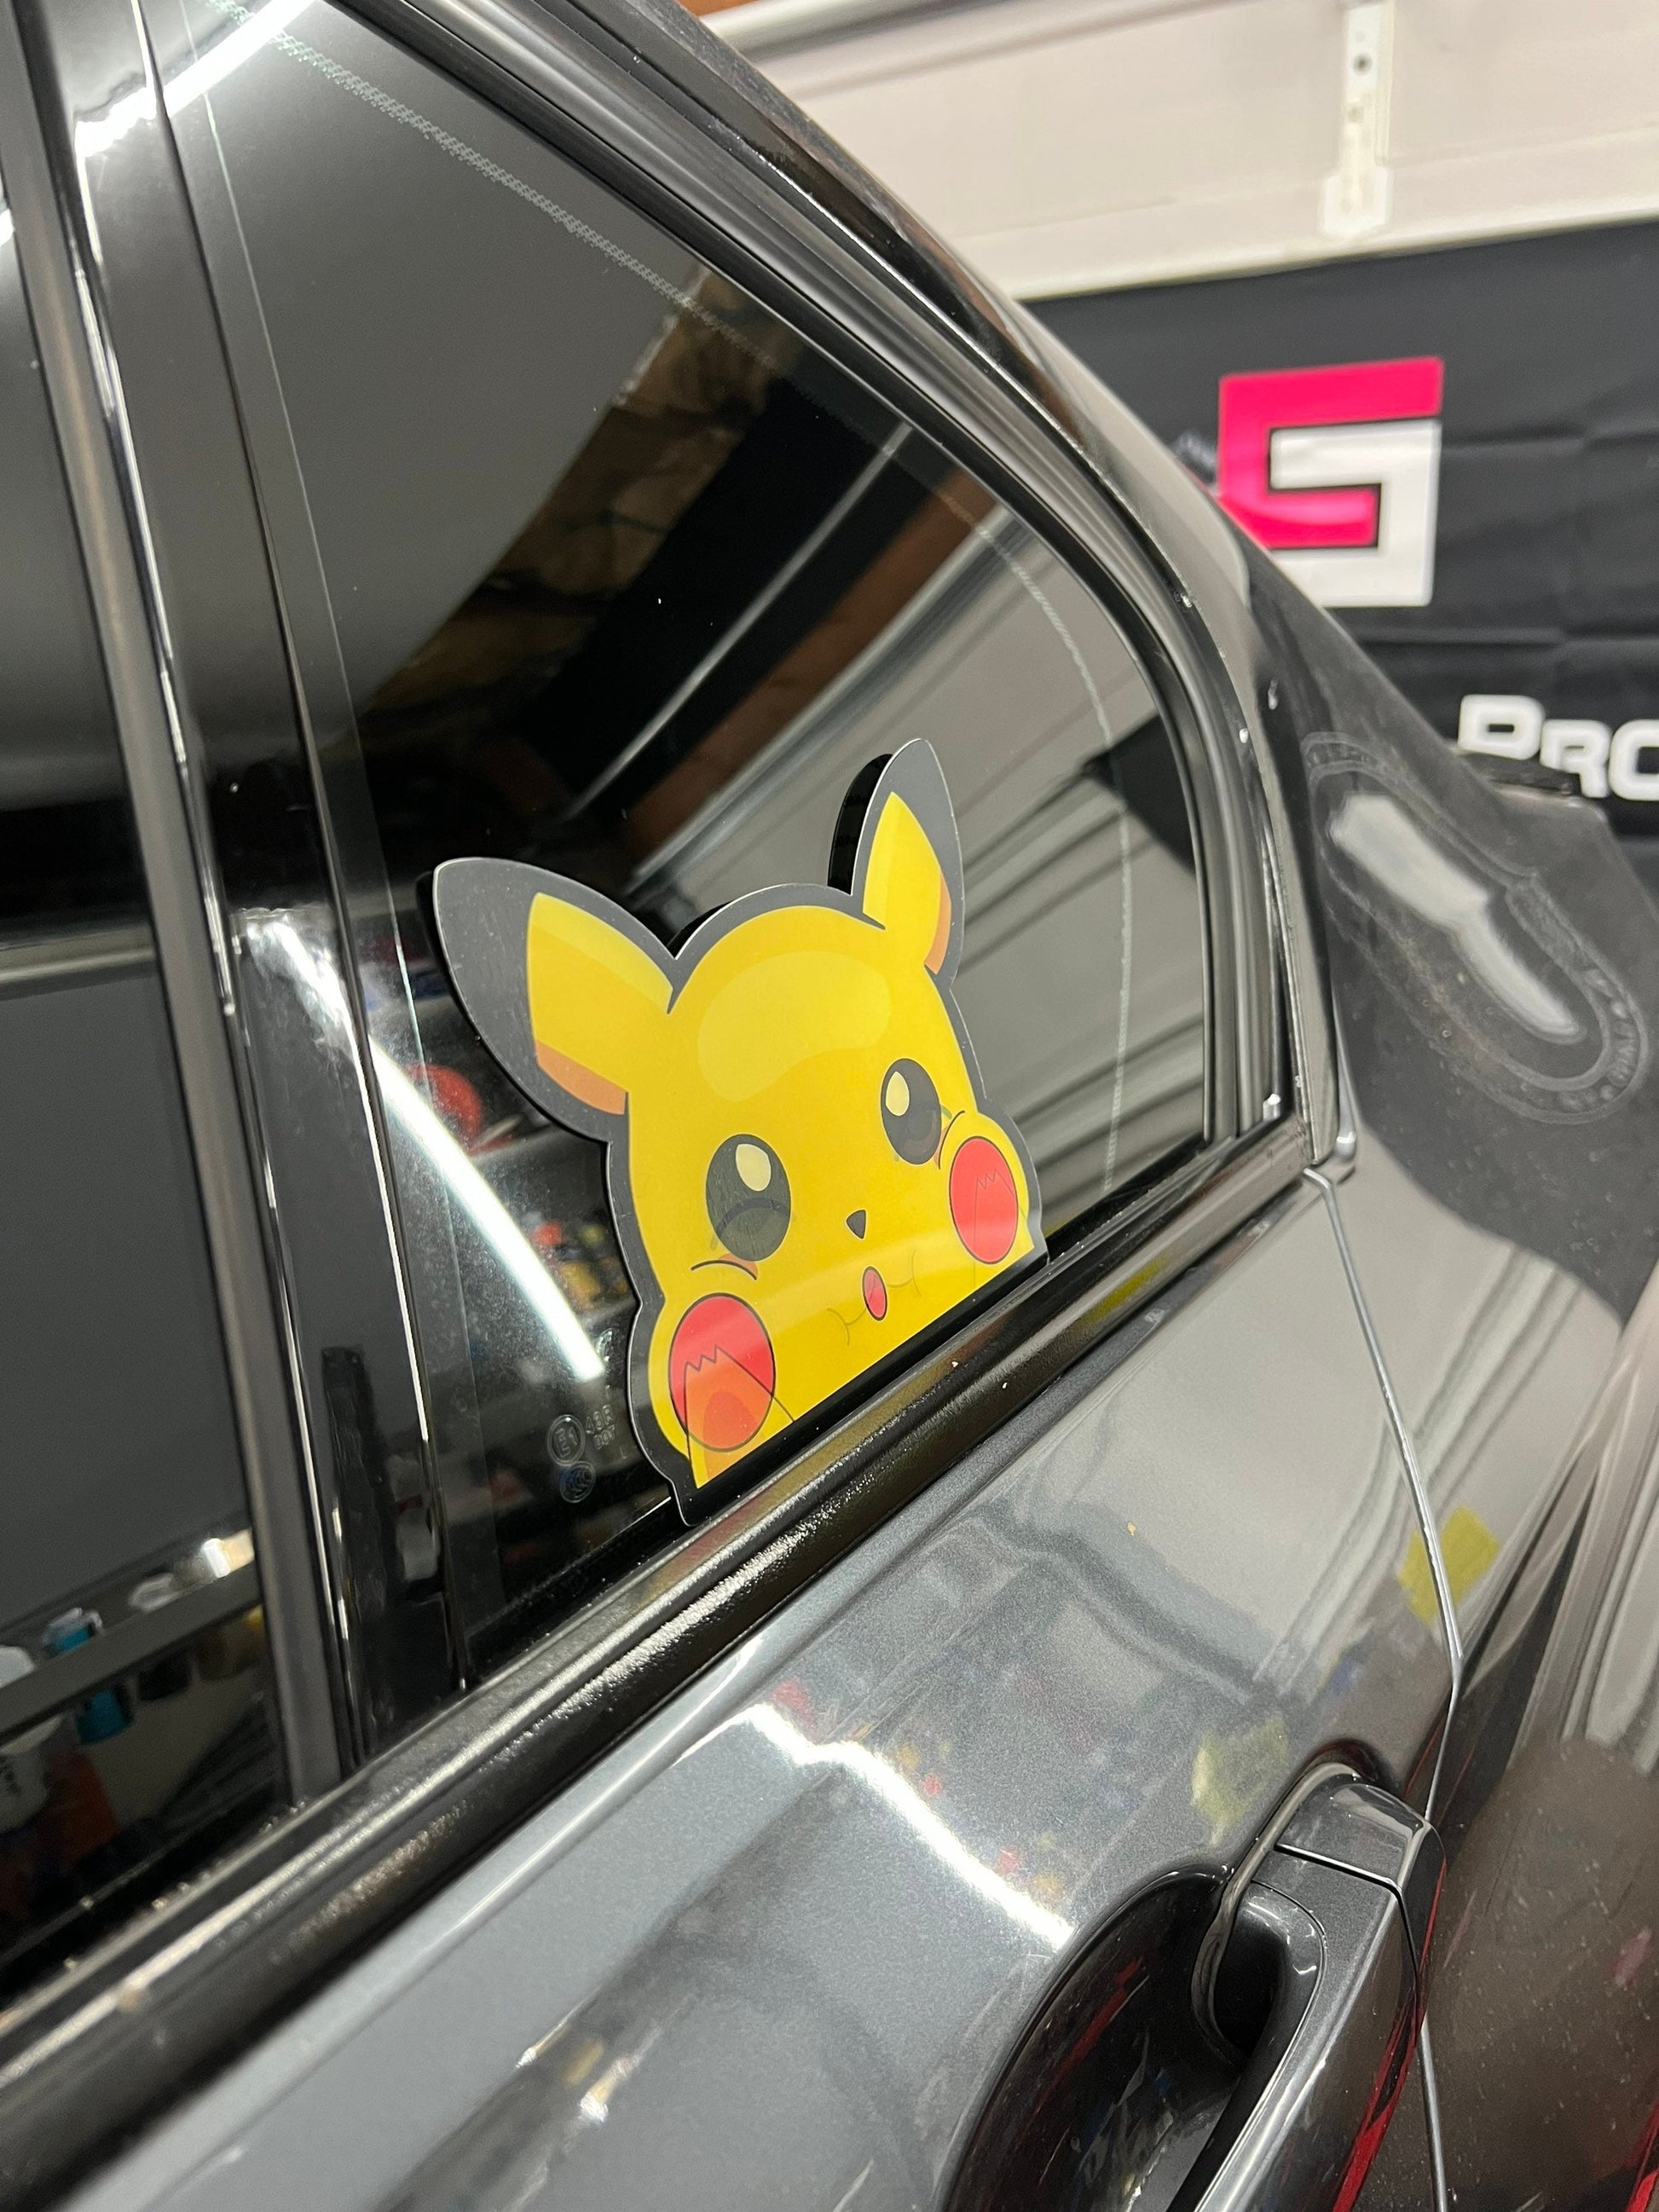 Surprised Pikachu Decal